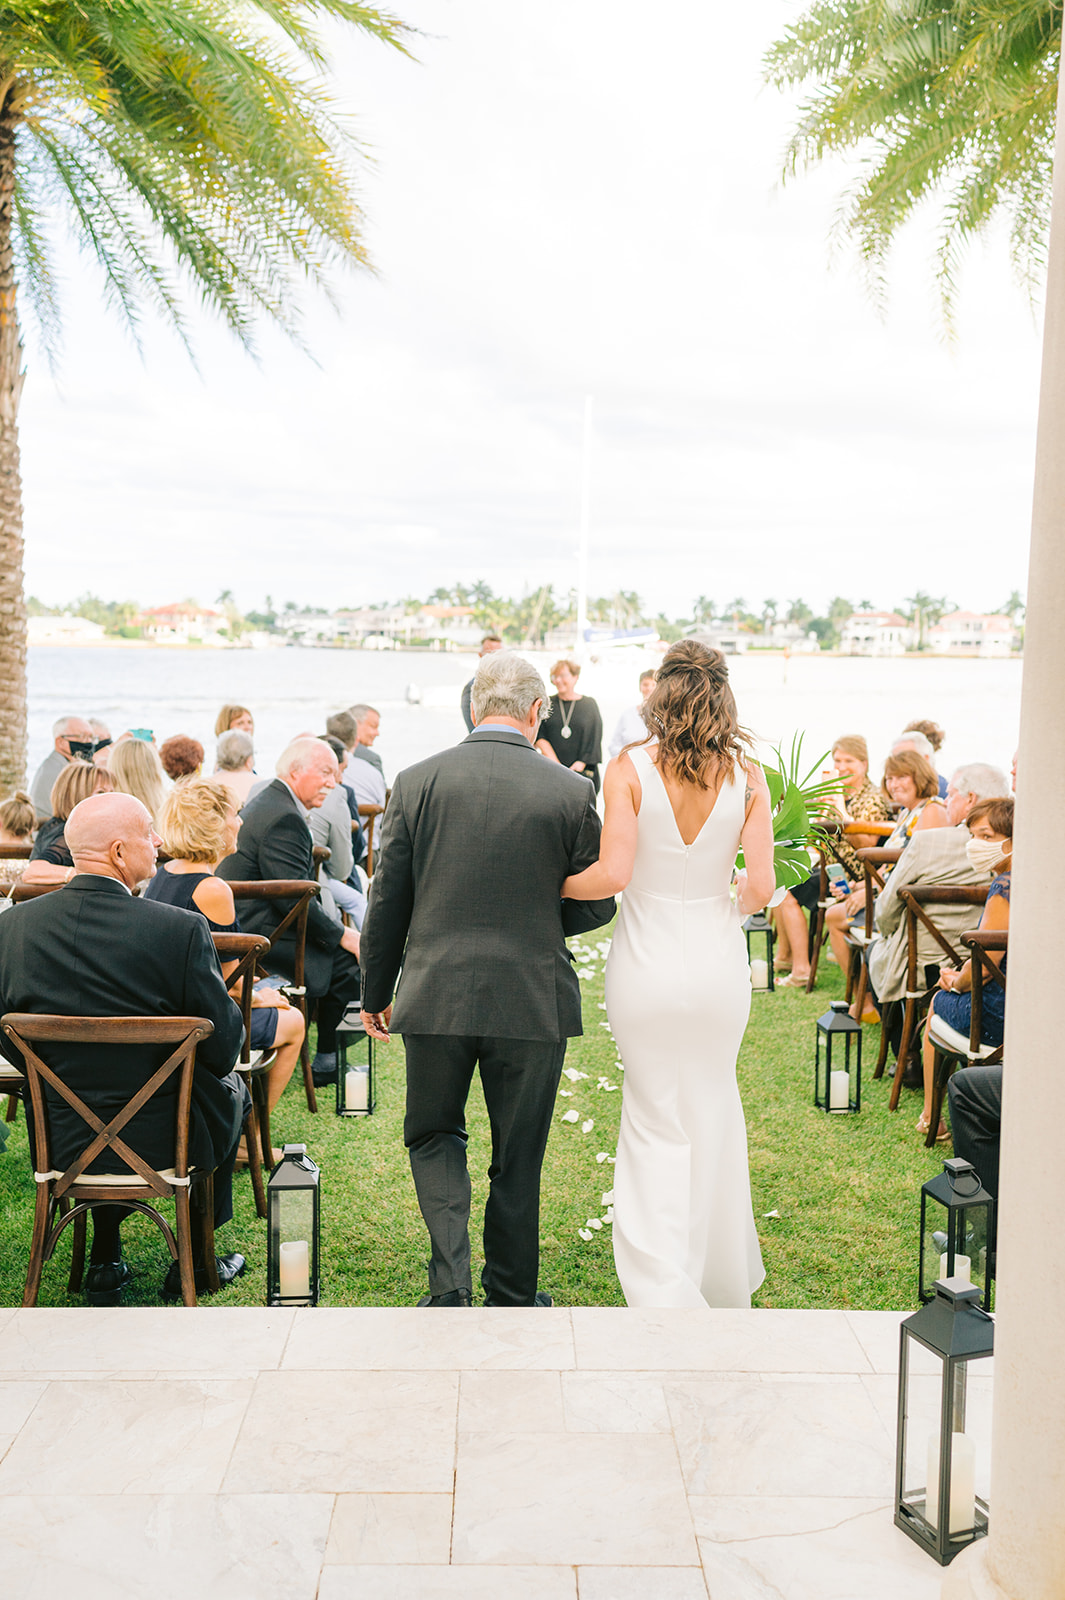 Naples FL wedding photographer captures the exchange of vows
